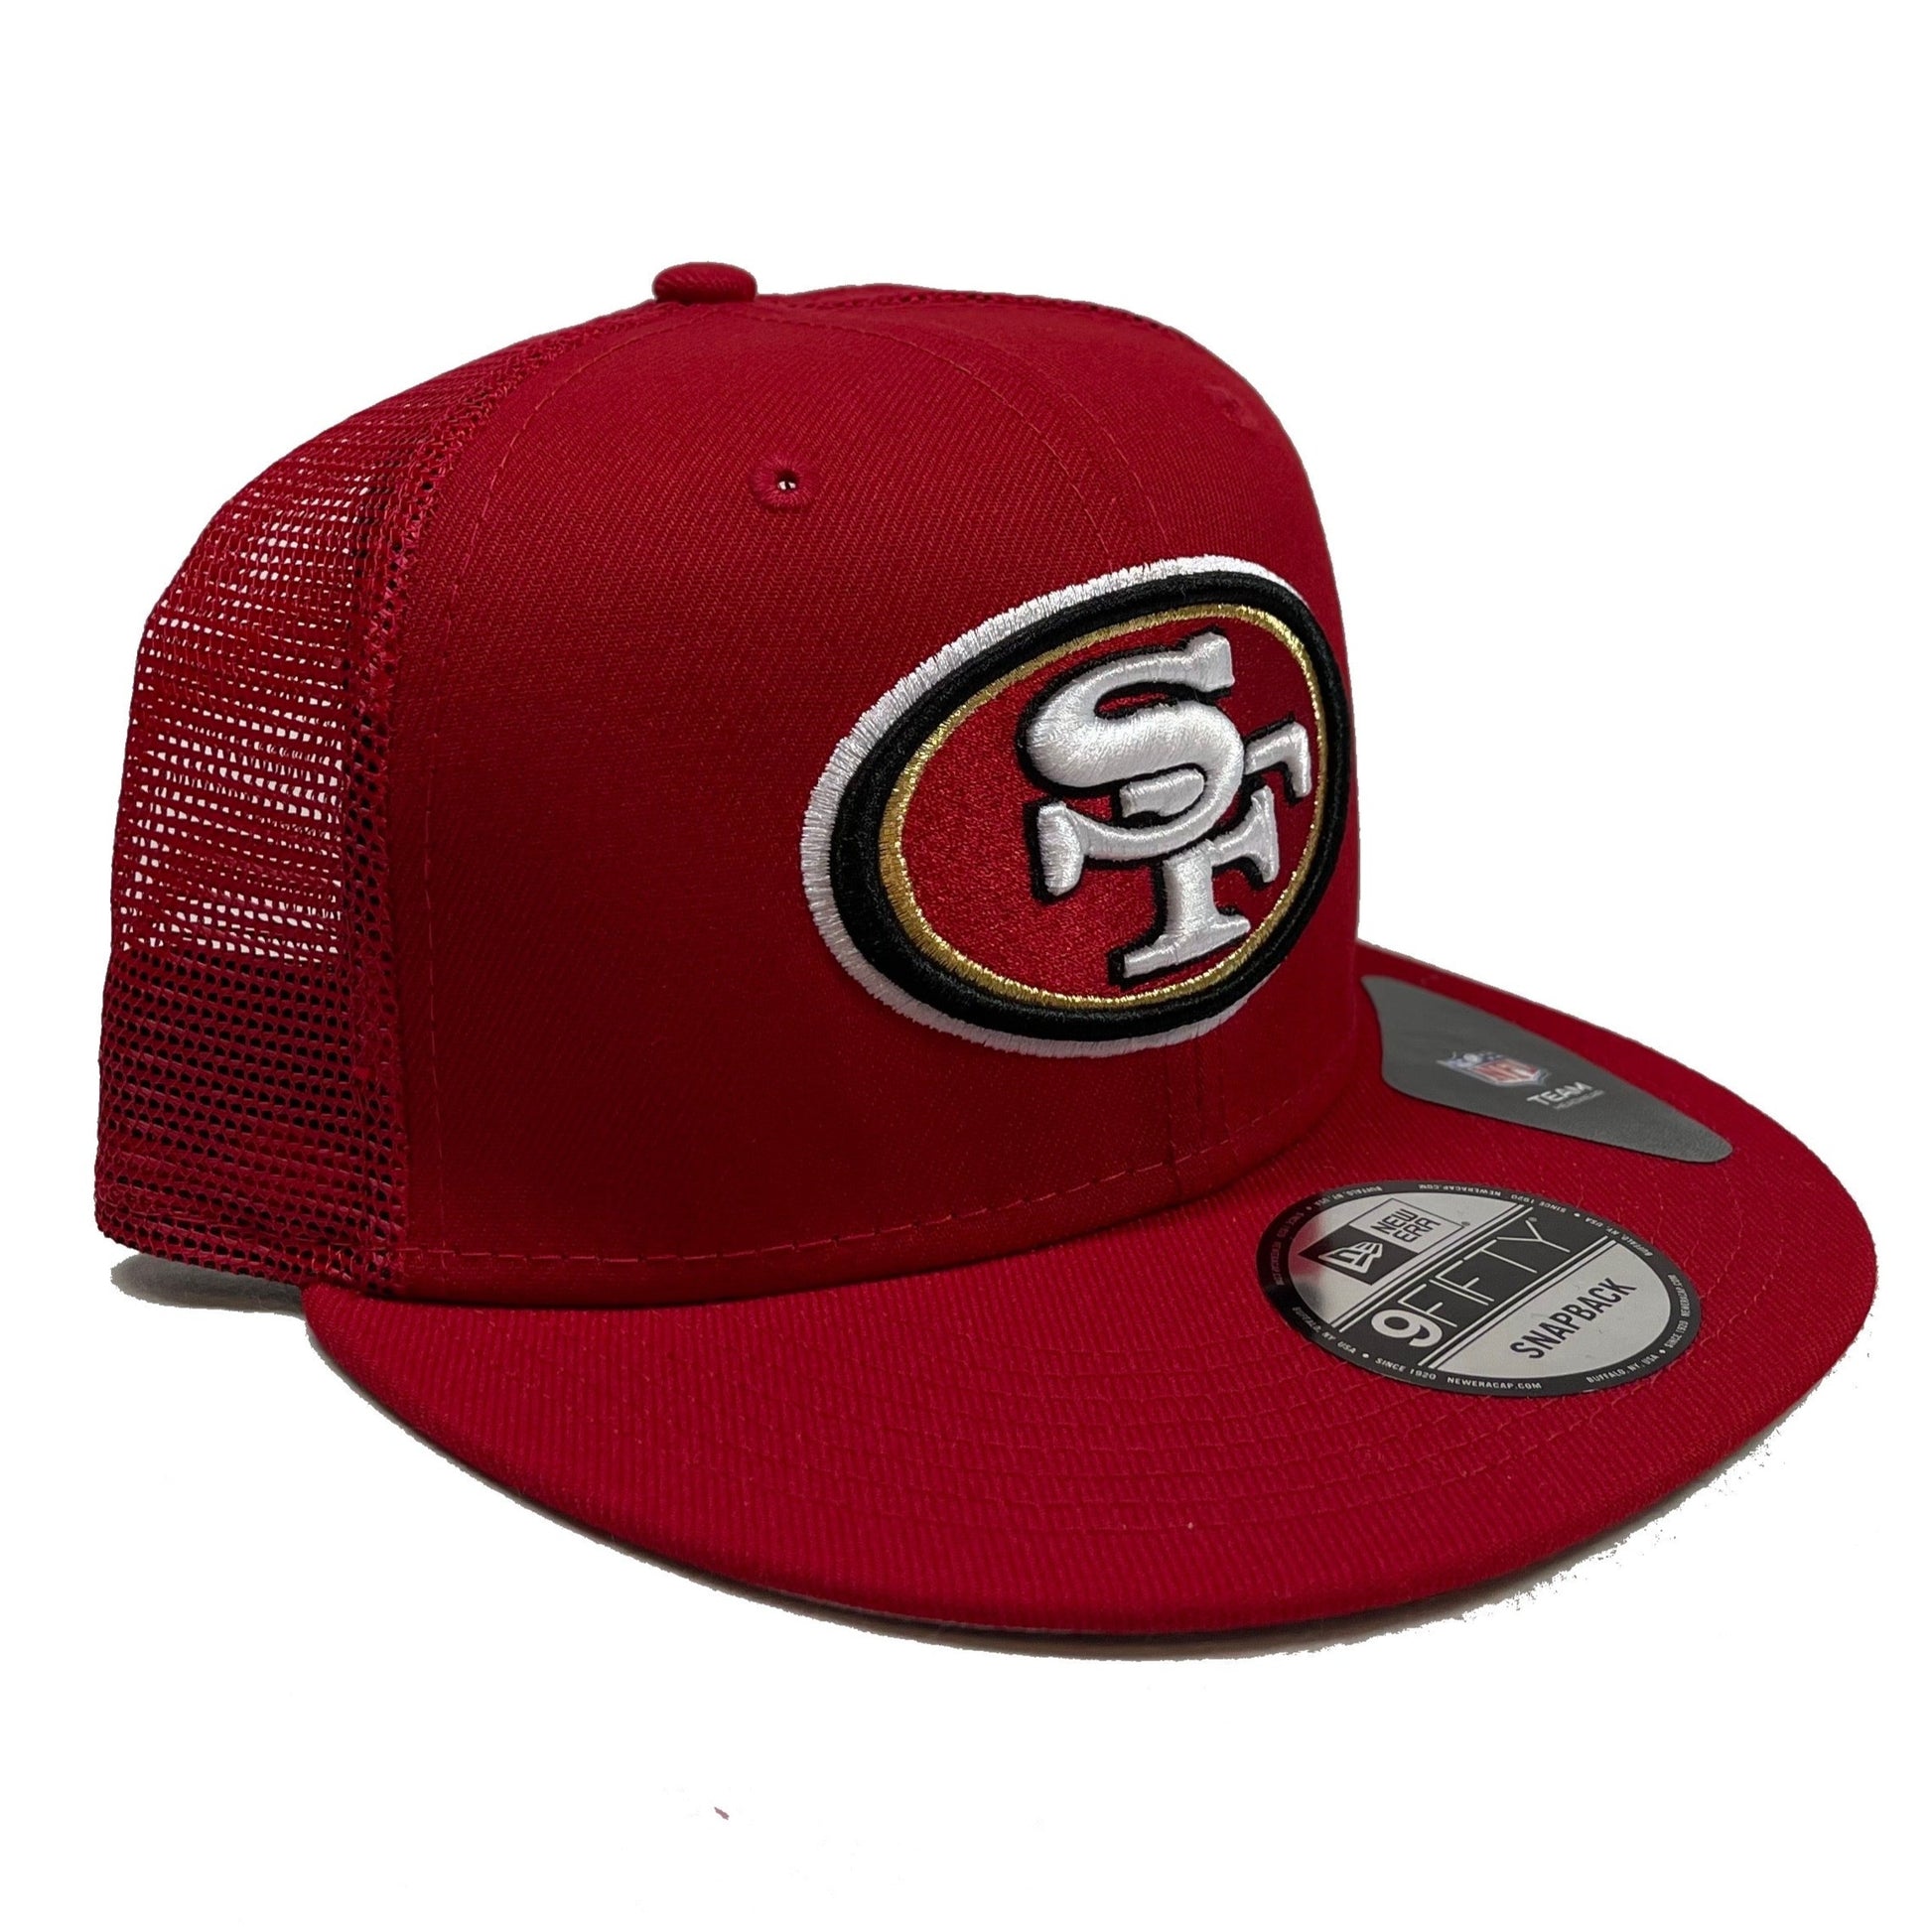 49ers trucker hat